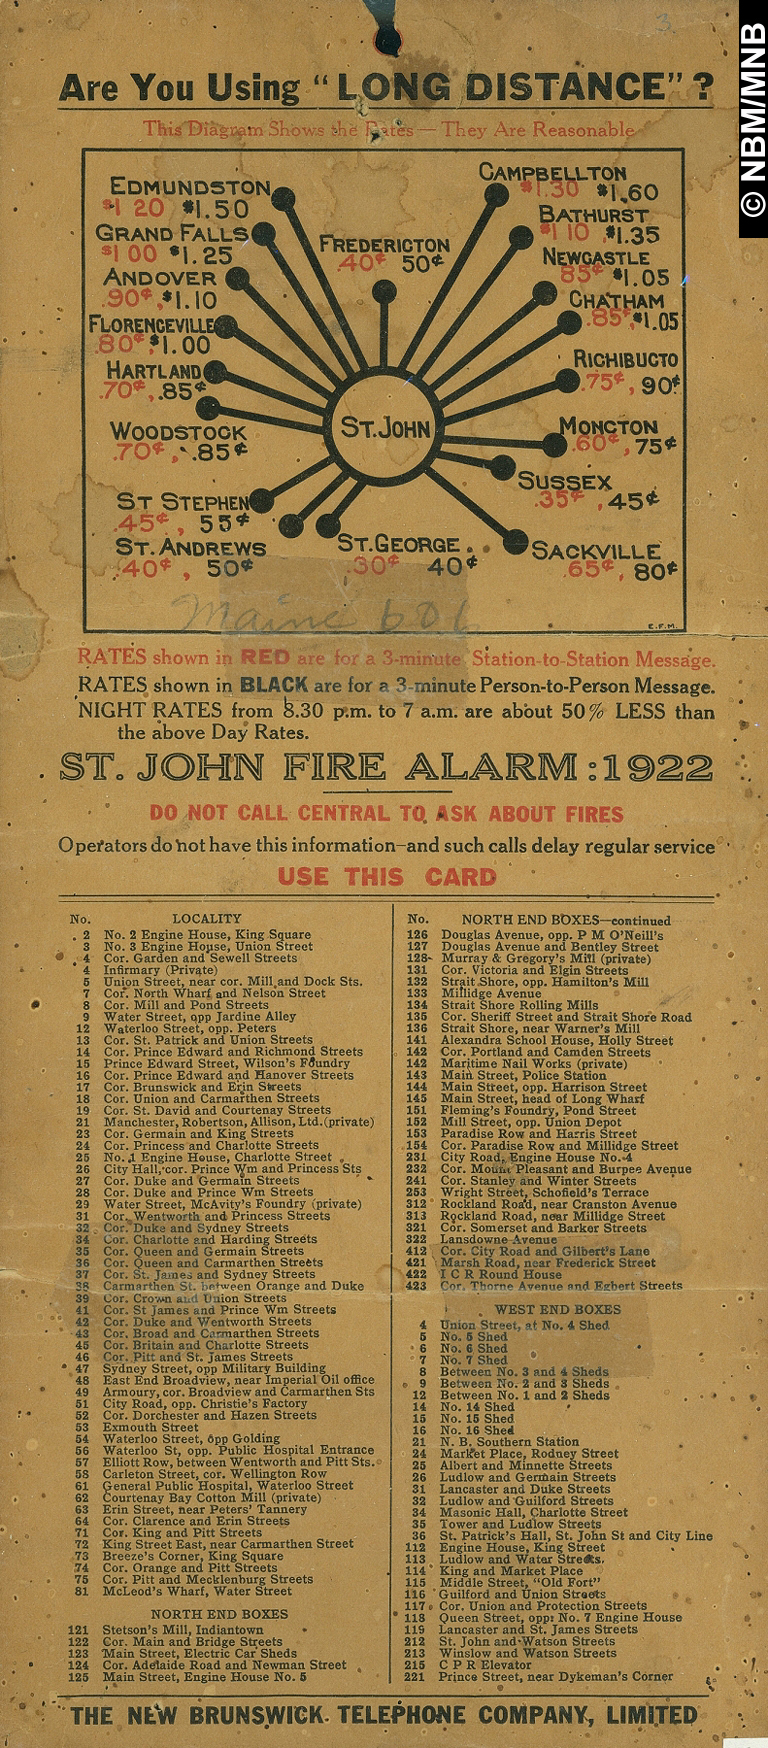 Long Distance Rates and Saint John Fire Alarm Boxes, Saint John, New Brunswick